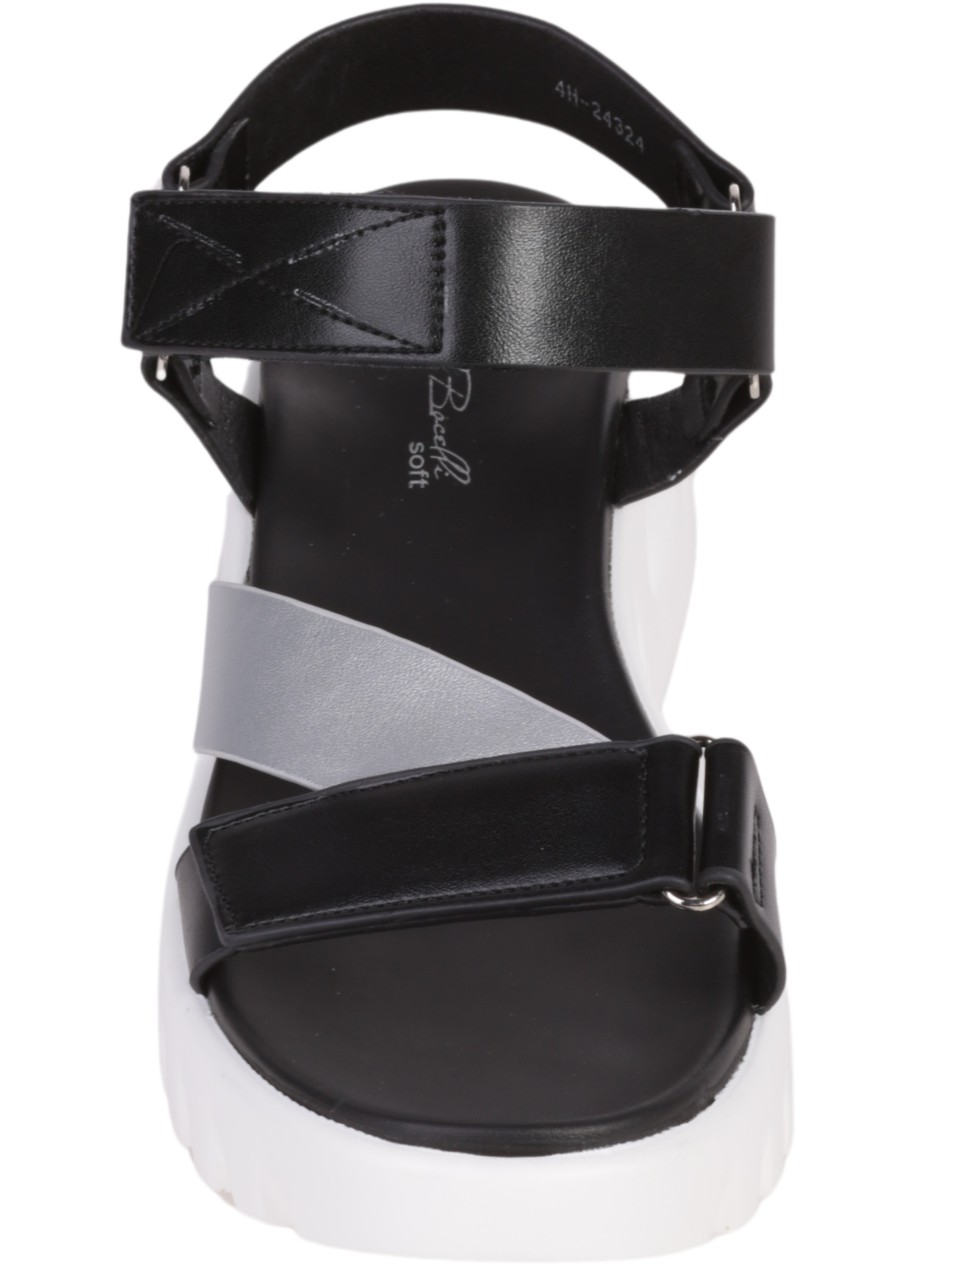 Ежедневни дамски сандали на платформа в черен/златист цвят 4H-24324 black/silver